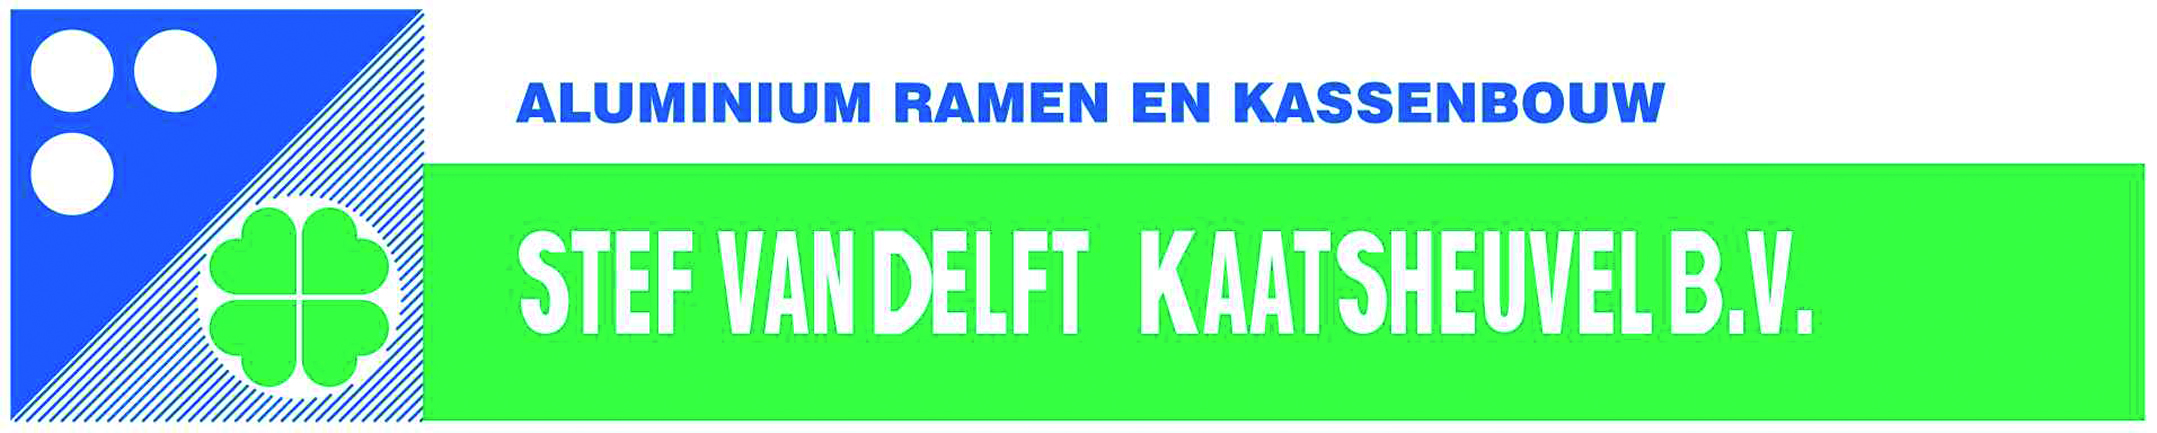 Stef-van-Delft-V1-JPEG.jpg